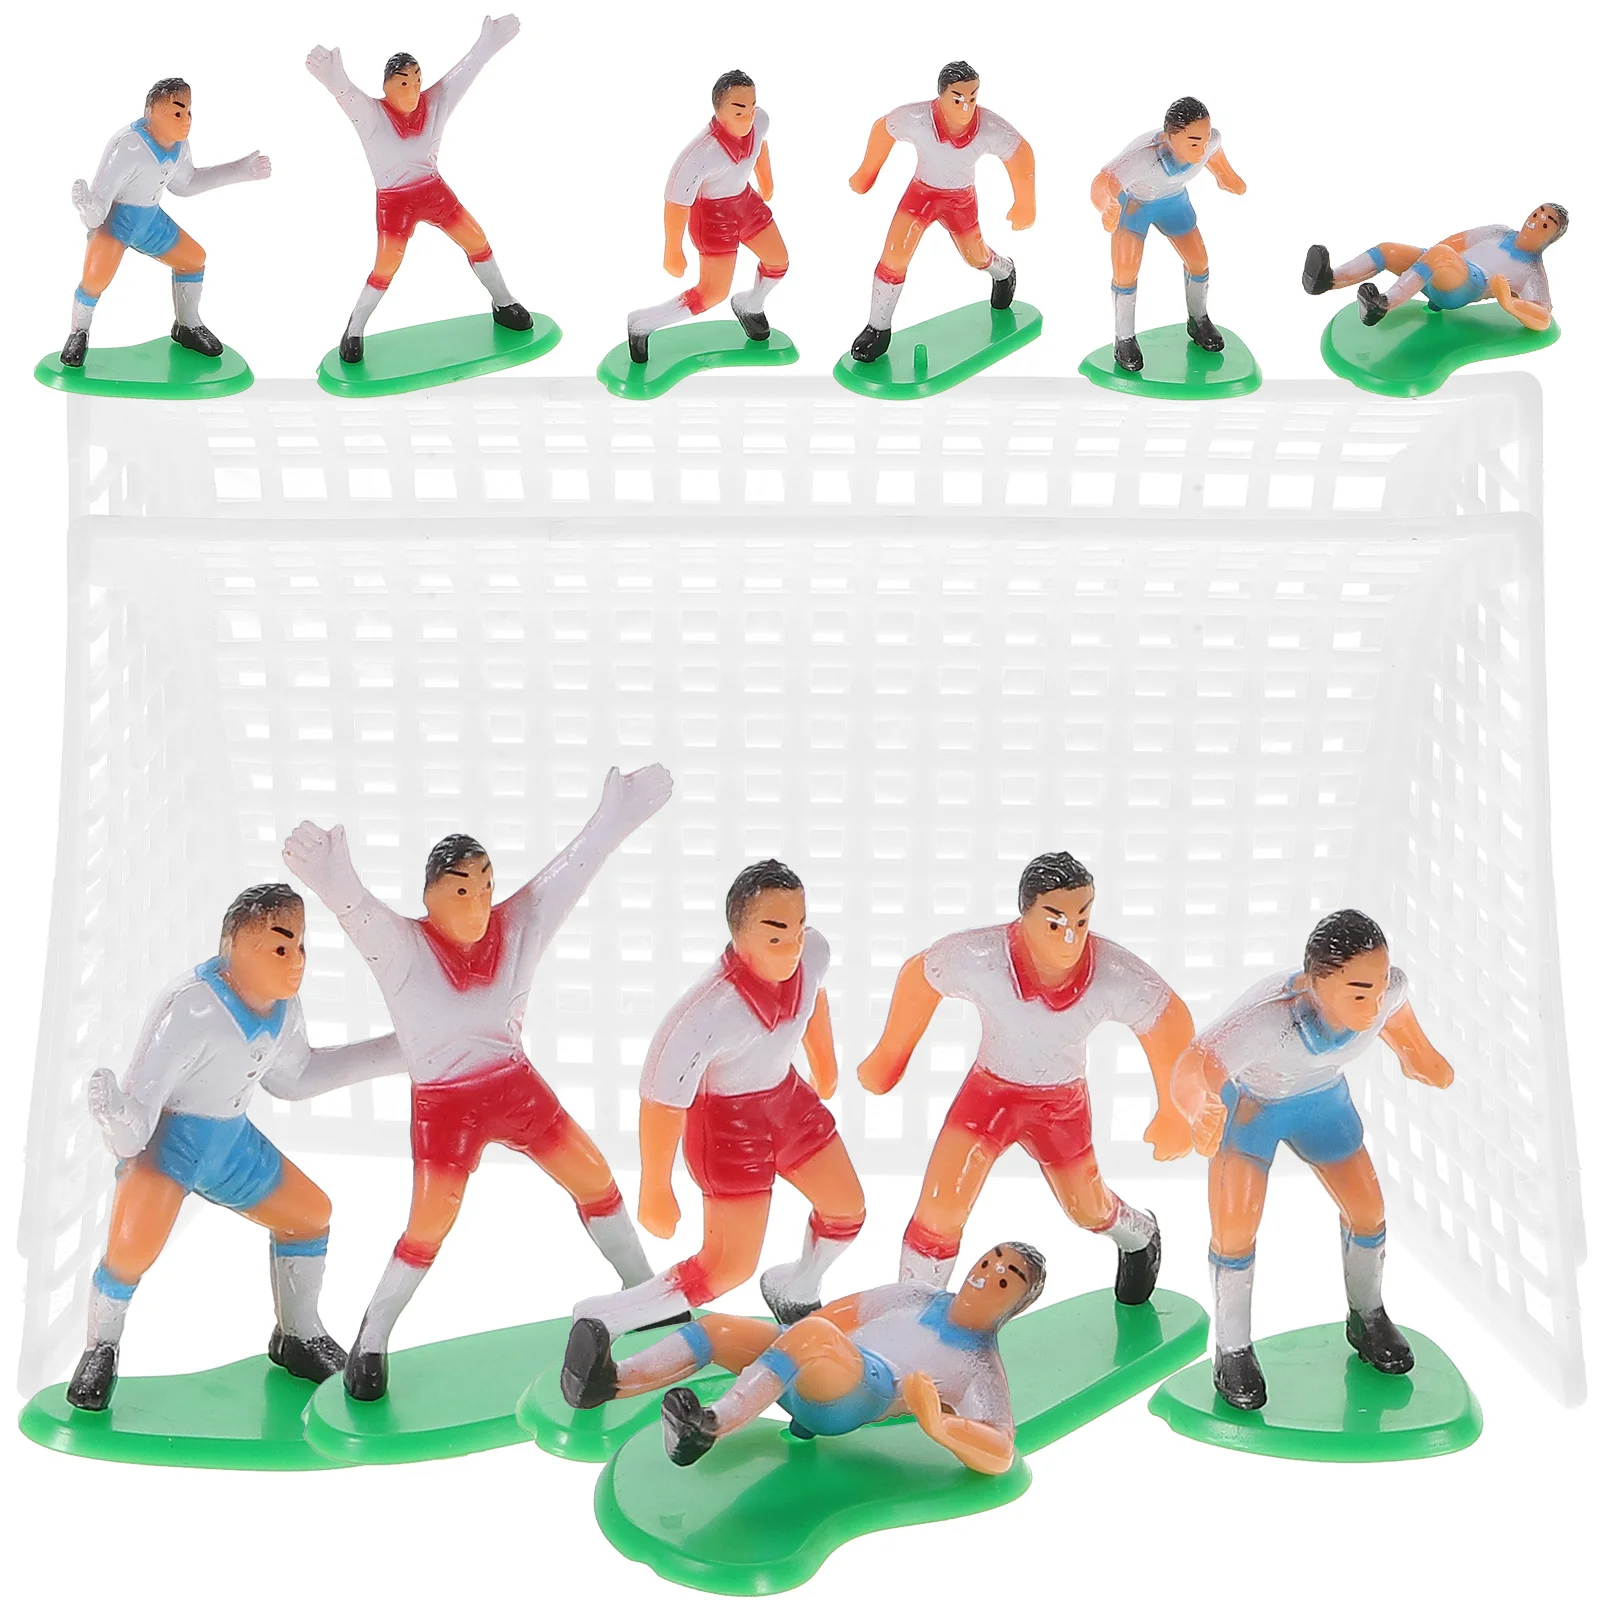 

16pcs Soccer Team Figurine Miniature Football Guys Boys Net Model Photo Prop Athlete Action Figure Cake Topper for Children Kids